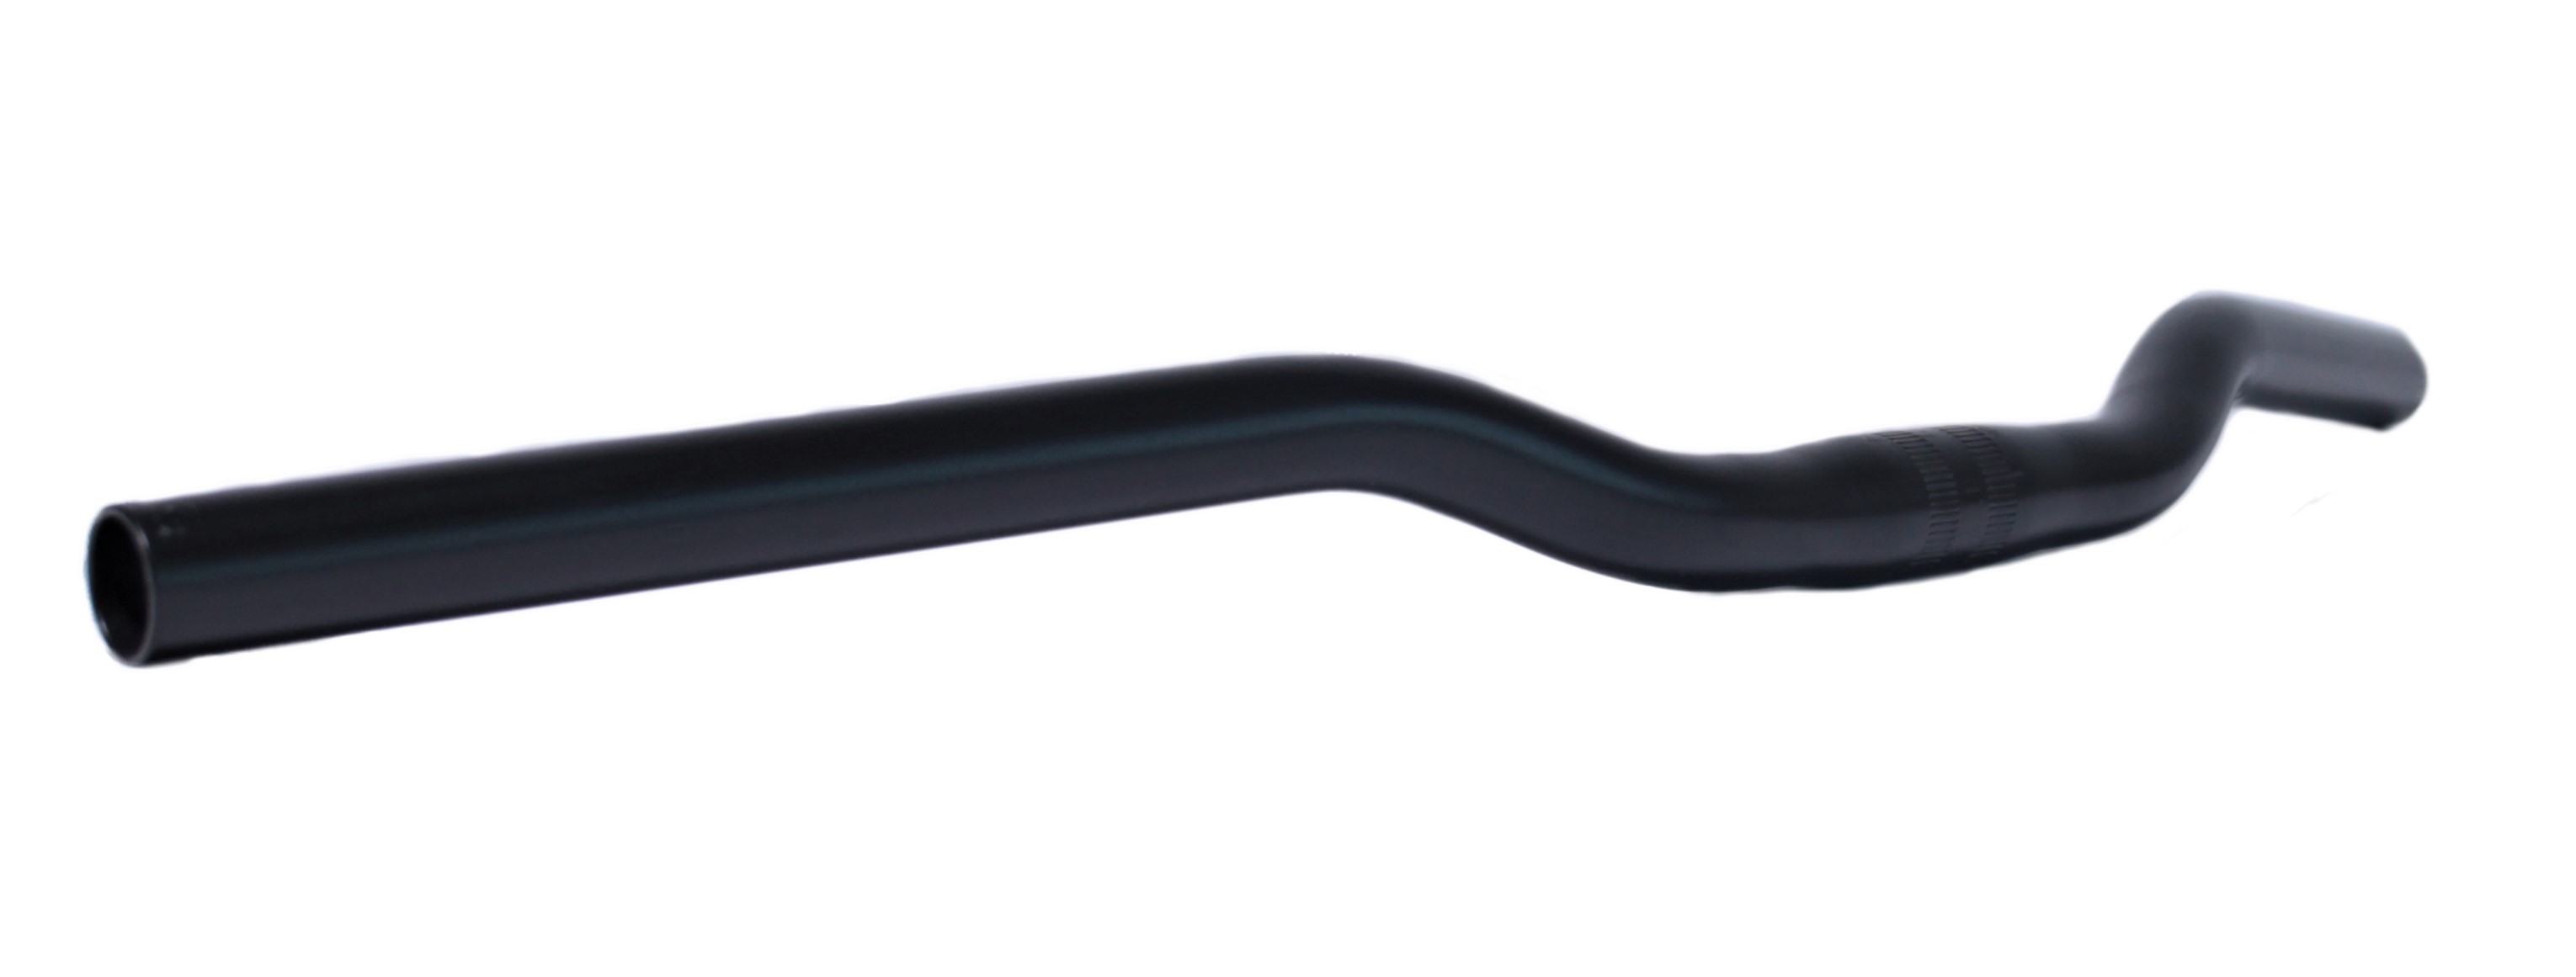 Handlebar Dragbar, 635 mm, Black